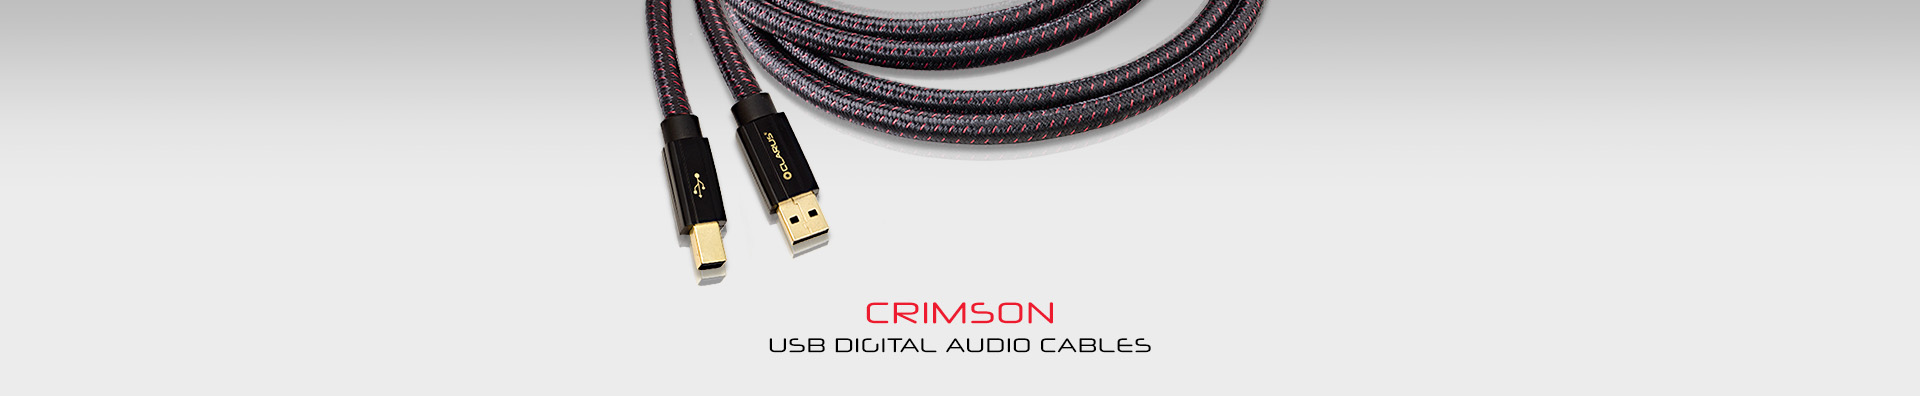 Clarus USB Digital Audio Cables